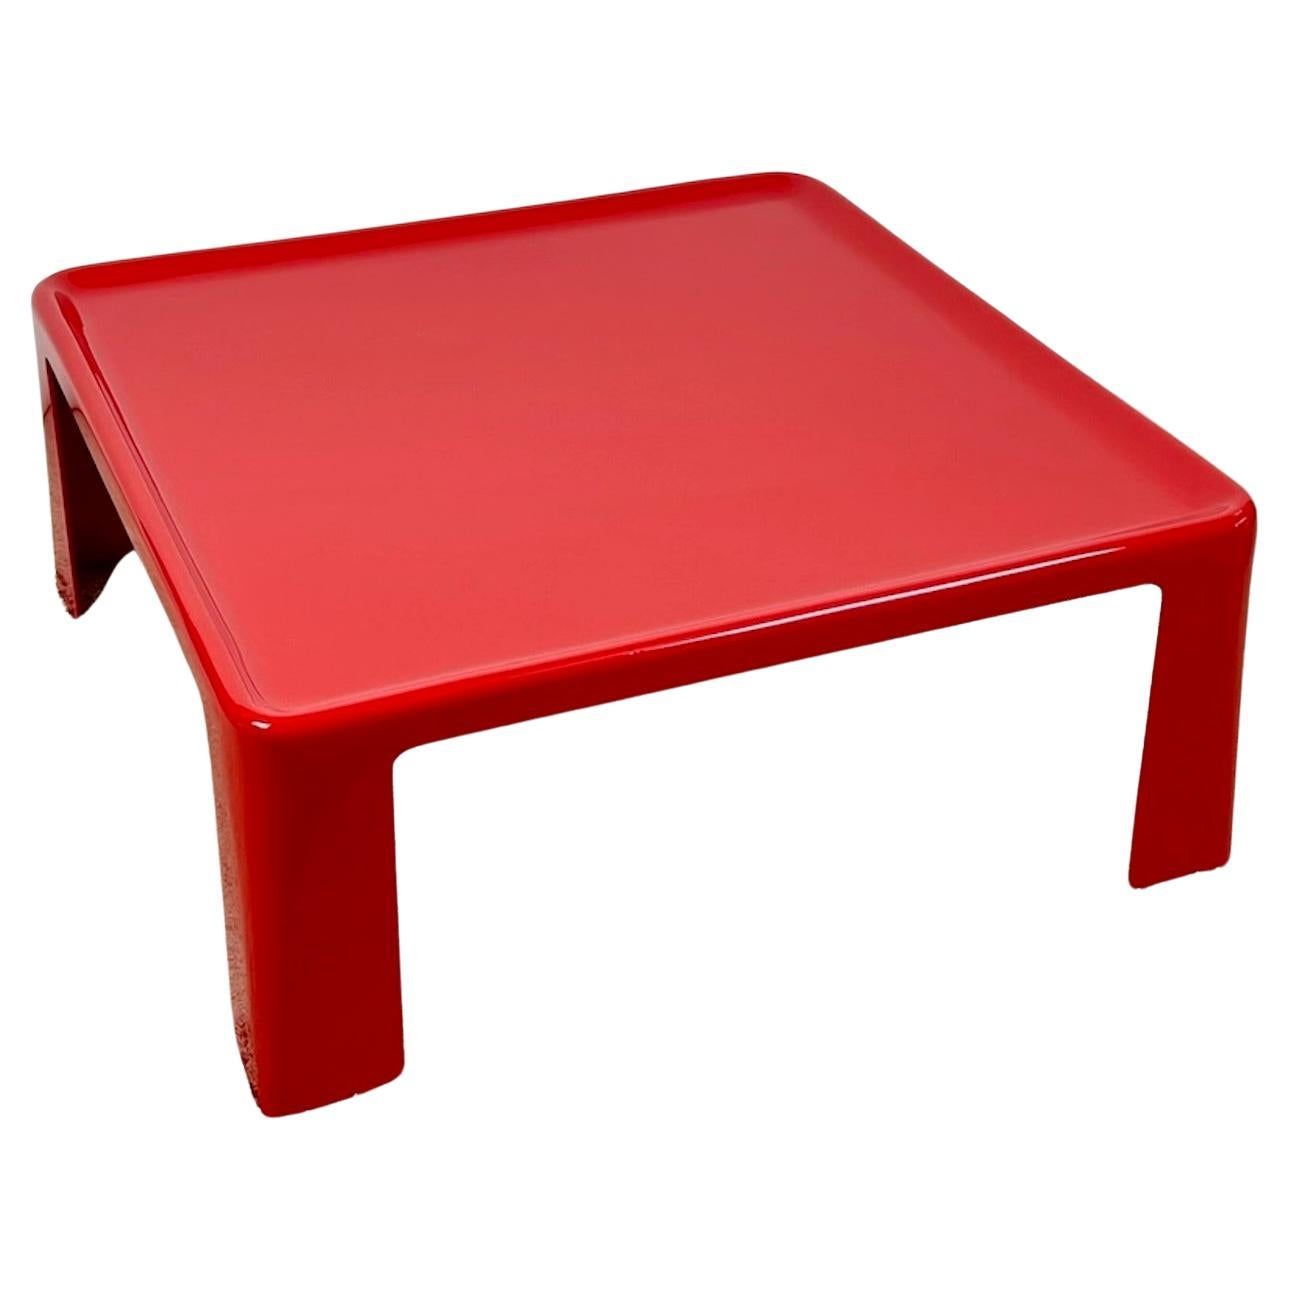 Amanta Table Mario Bellini for B&B Italia - Iconic 60s Design - Red Fiberglass